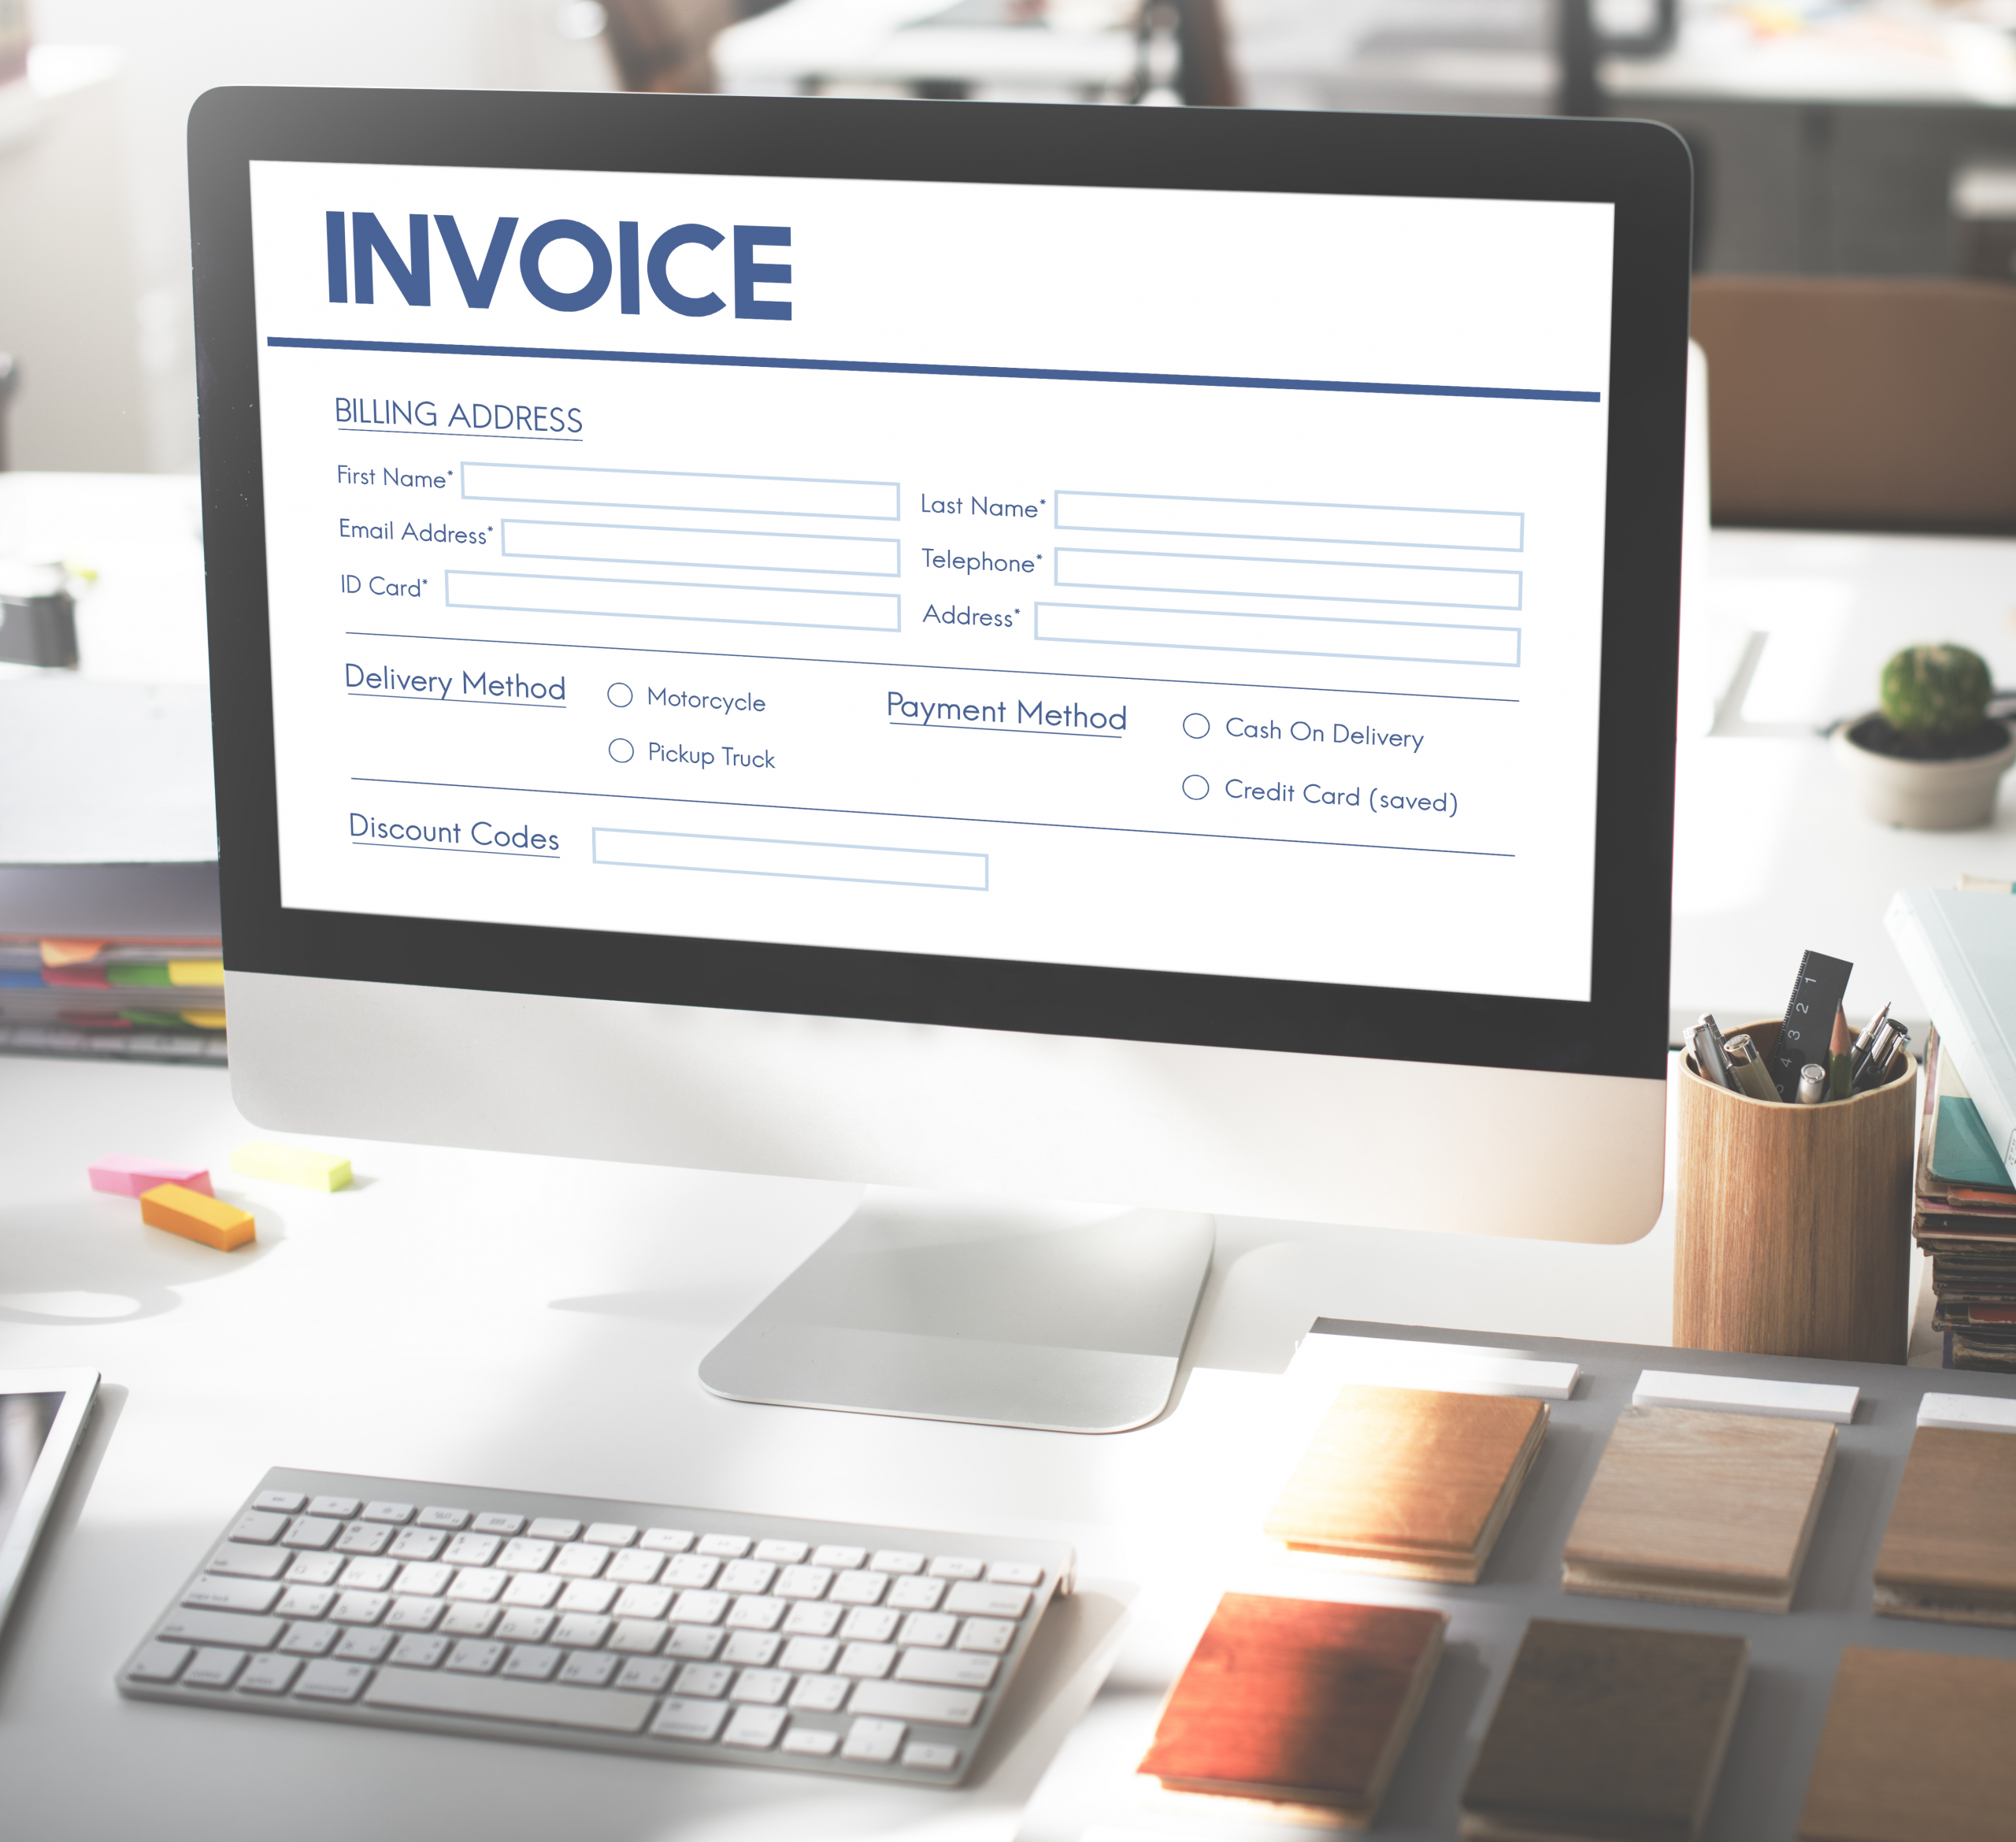 Imprezz e-invoicing and billing software